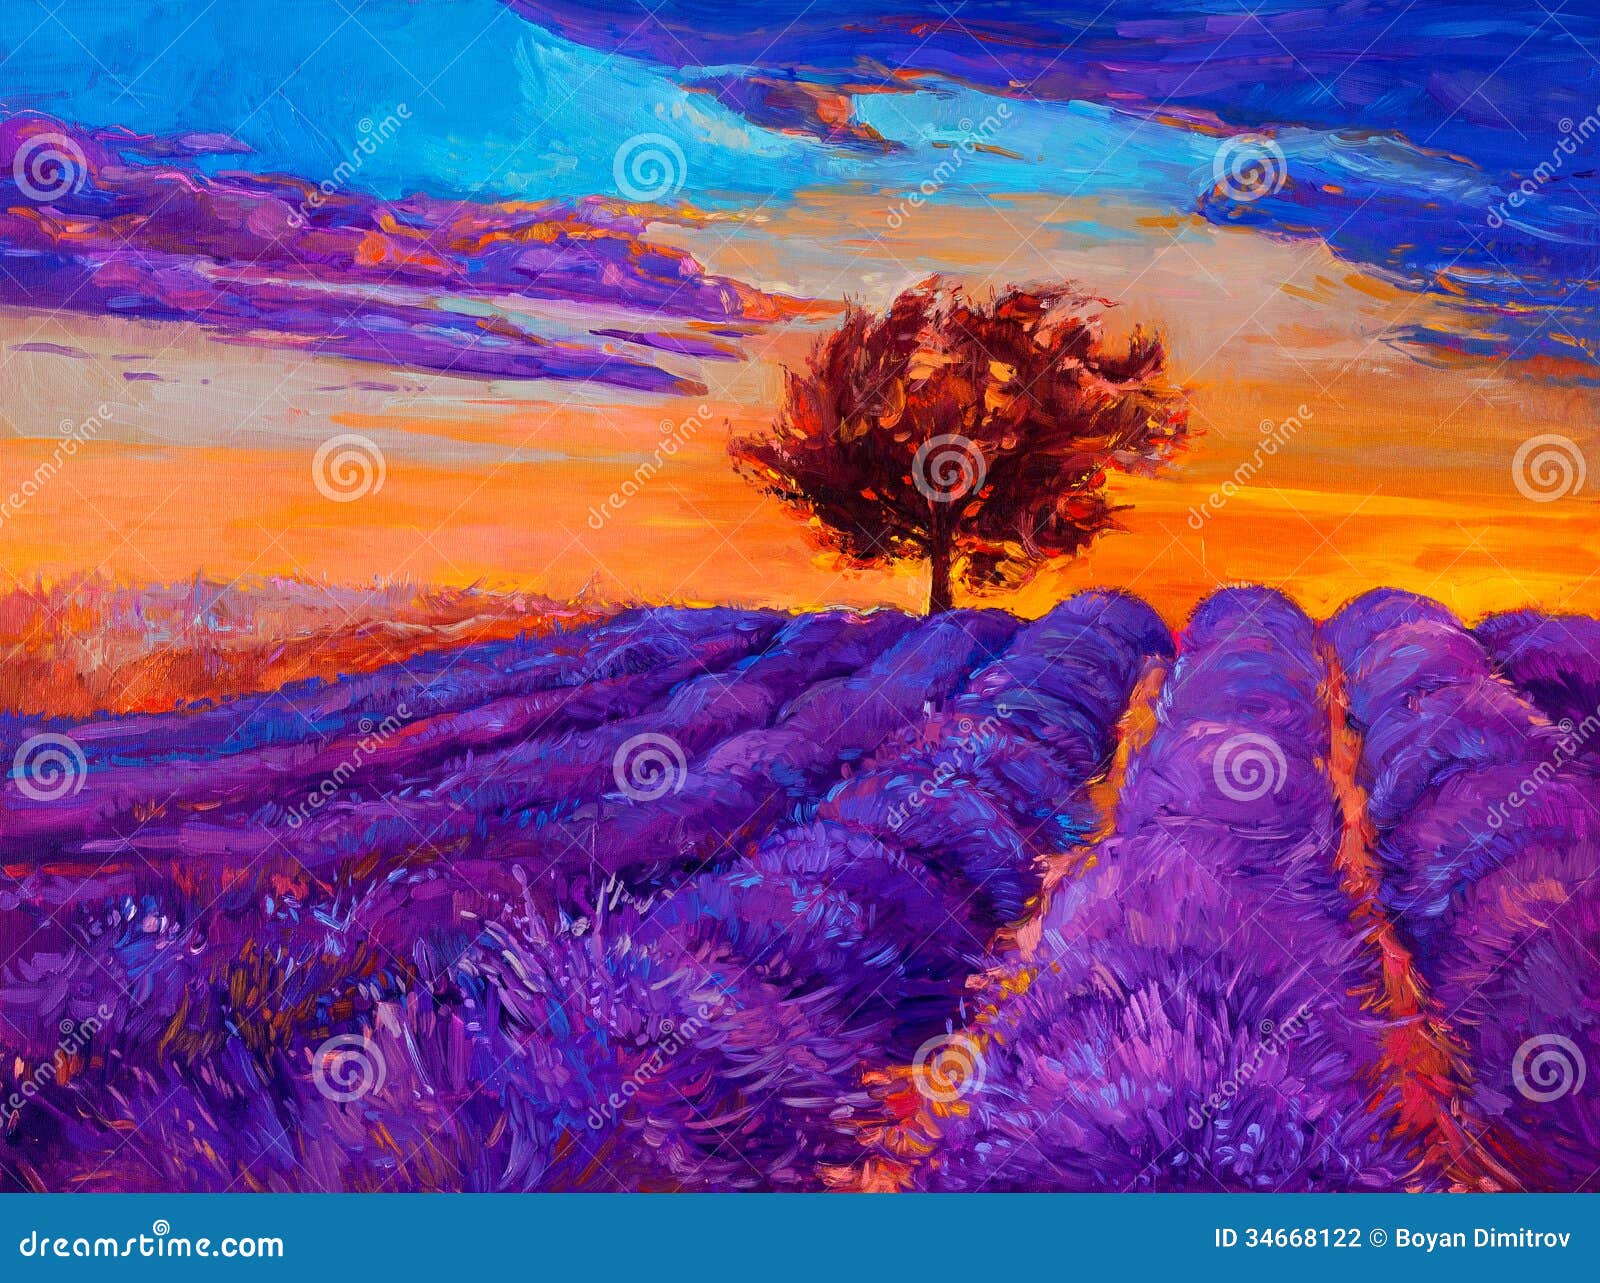 Lavender fields stock illustration. Illustration of fascinating - 34668122